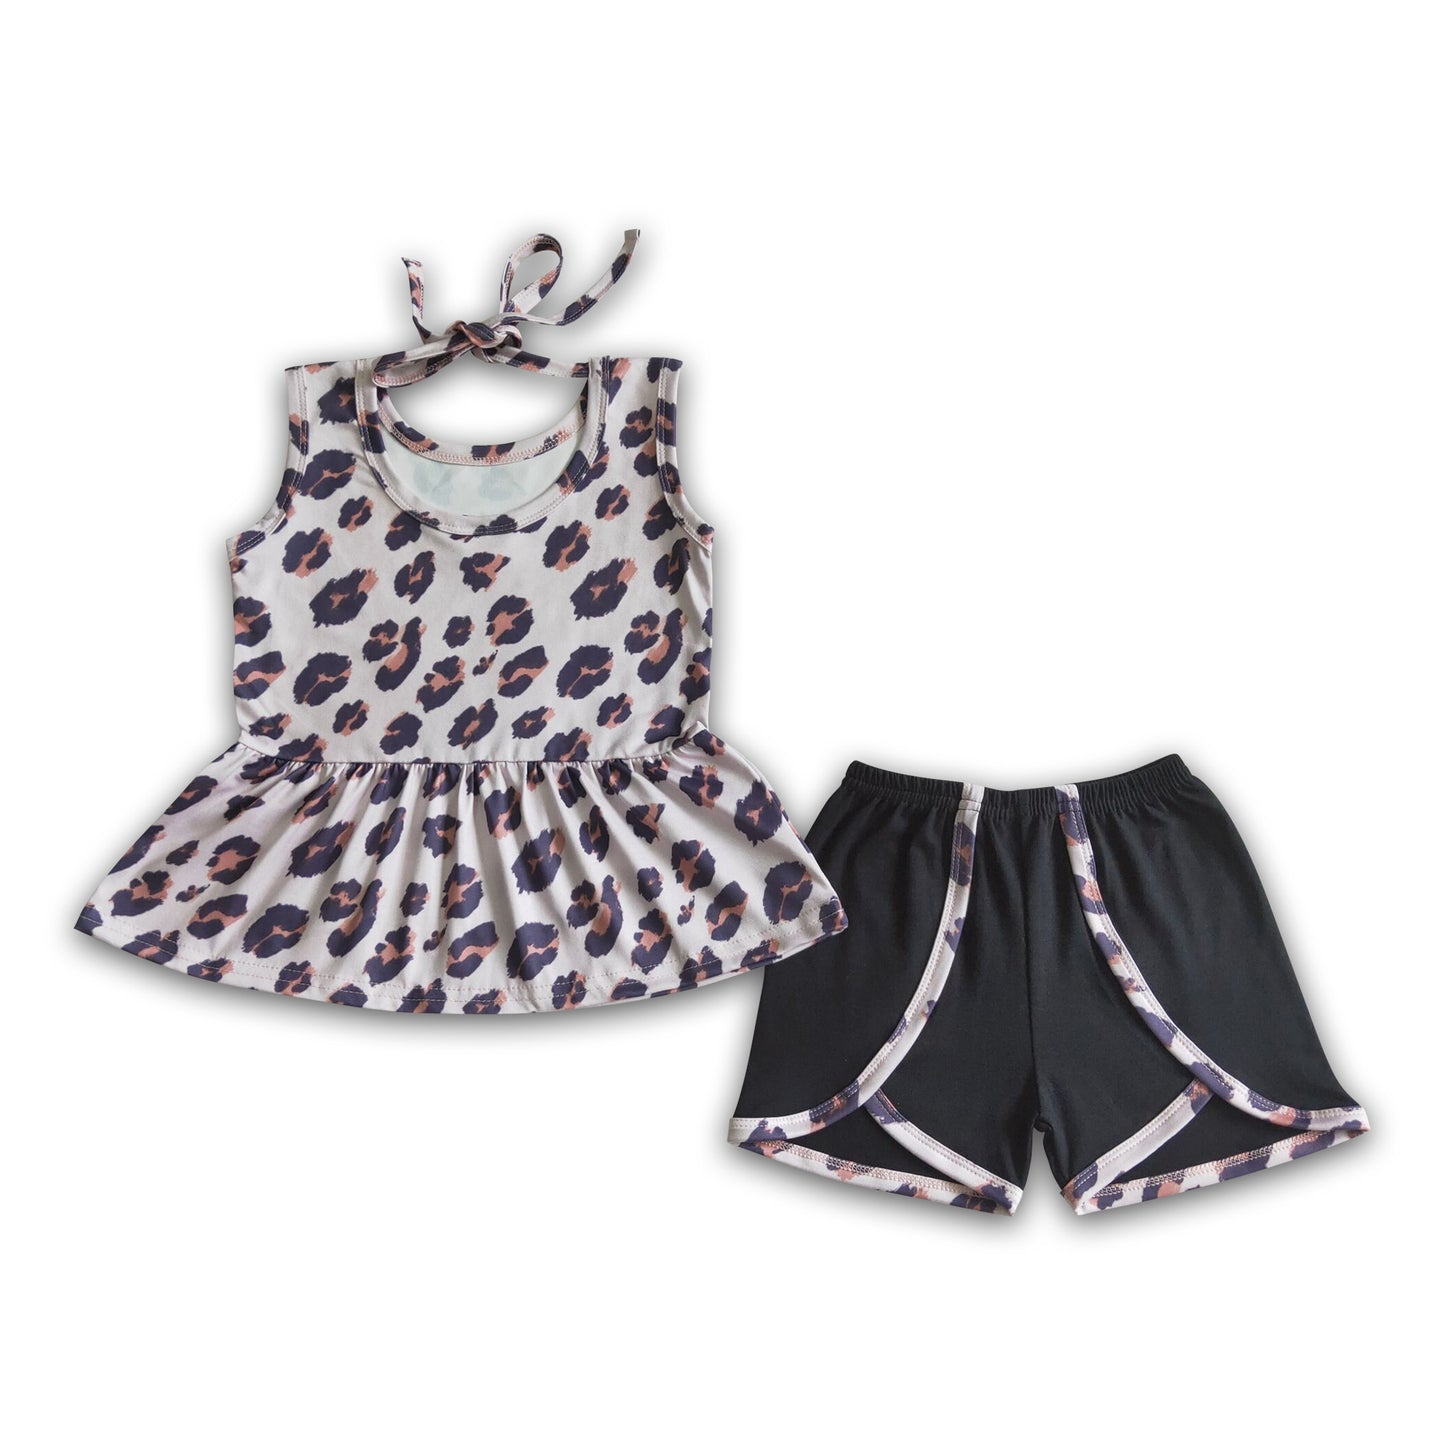 Leopard sleeveless shirt black shorts girls boutique clothes